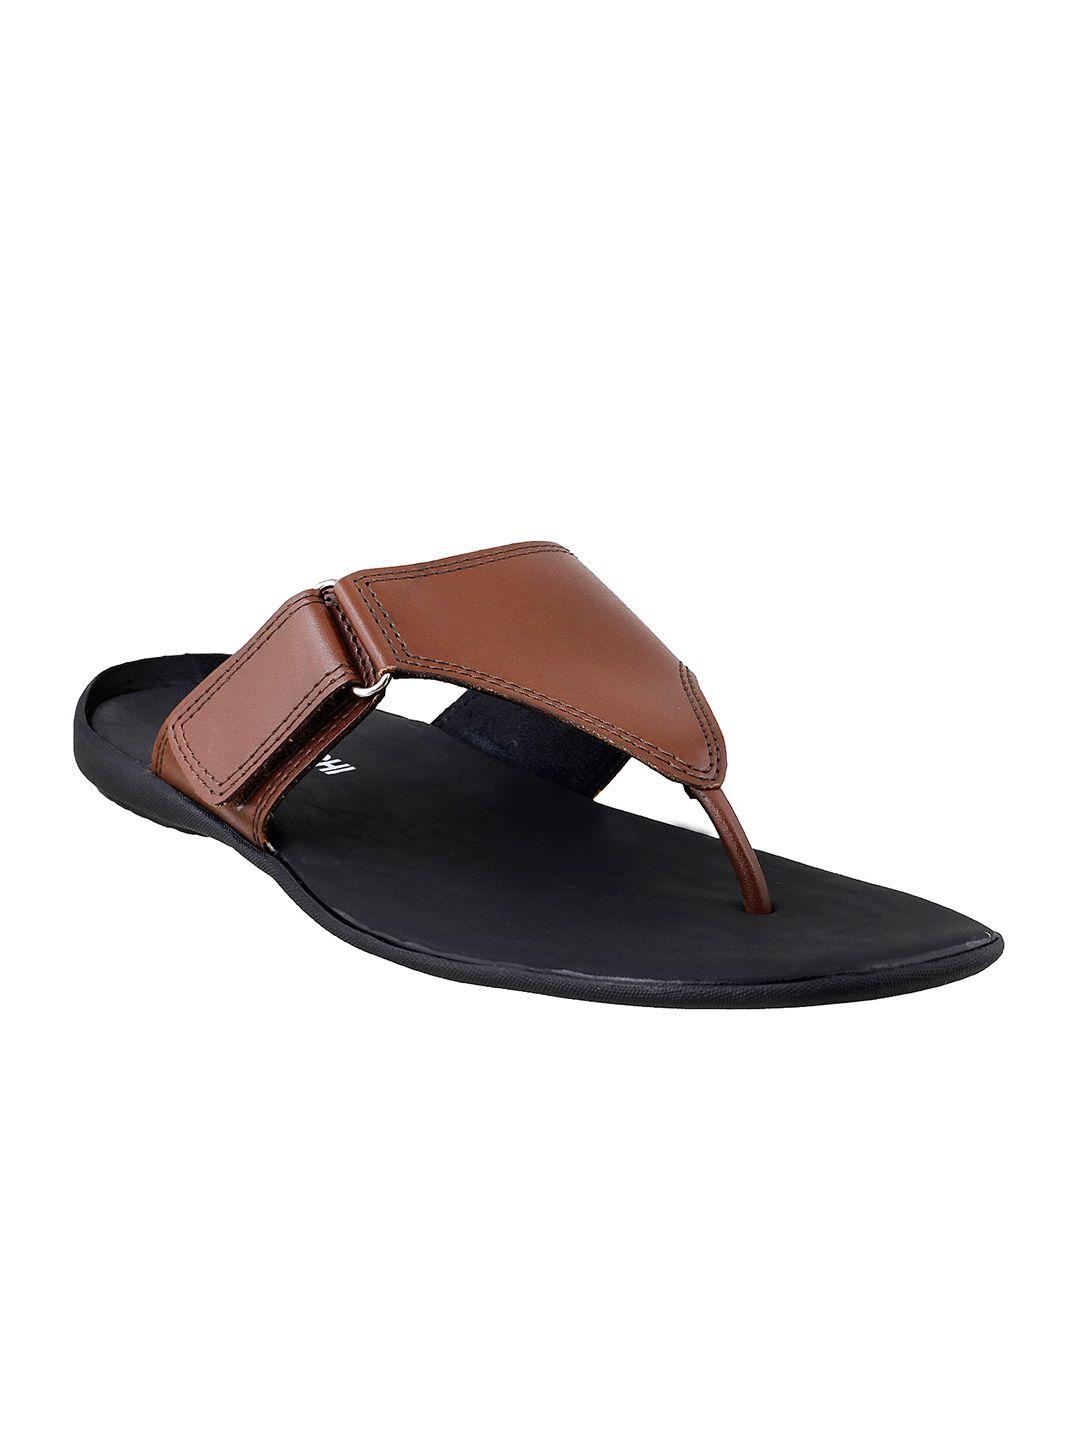 mochi men brown leather sandals